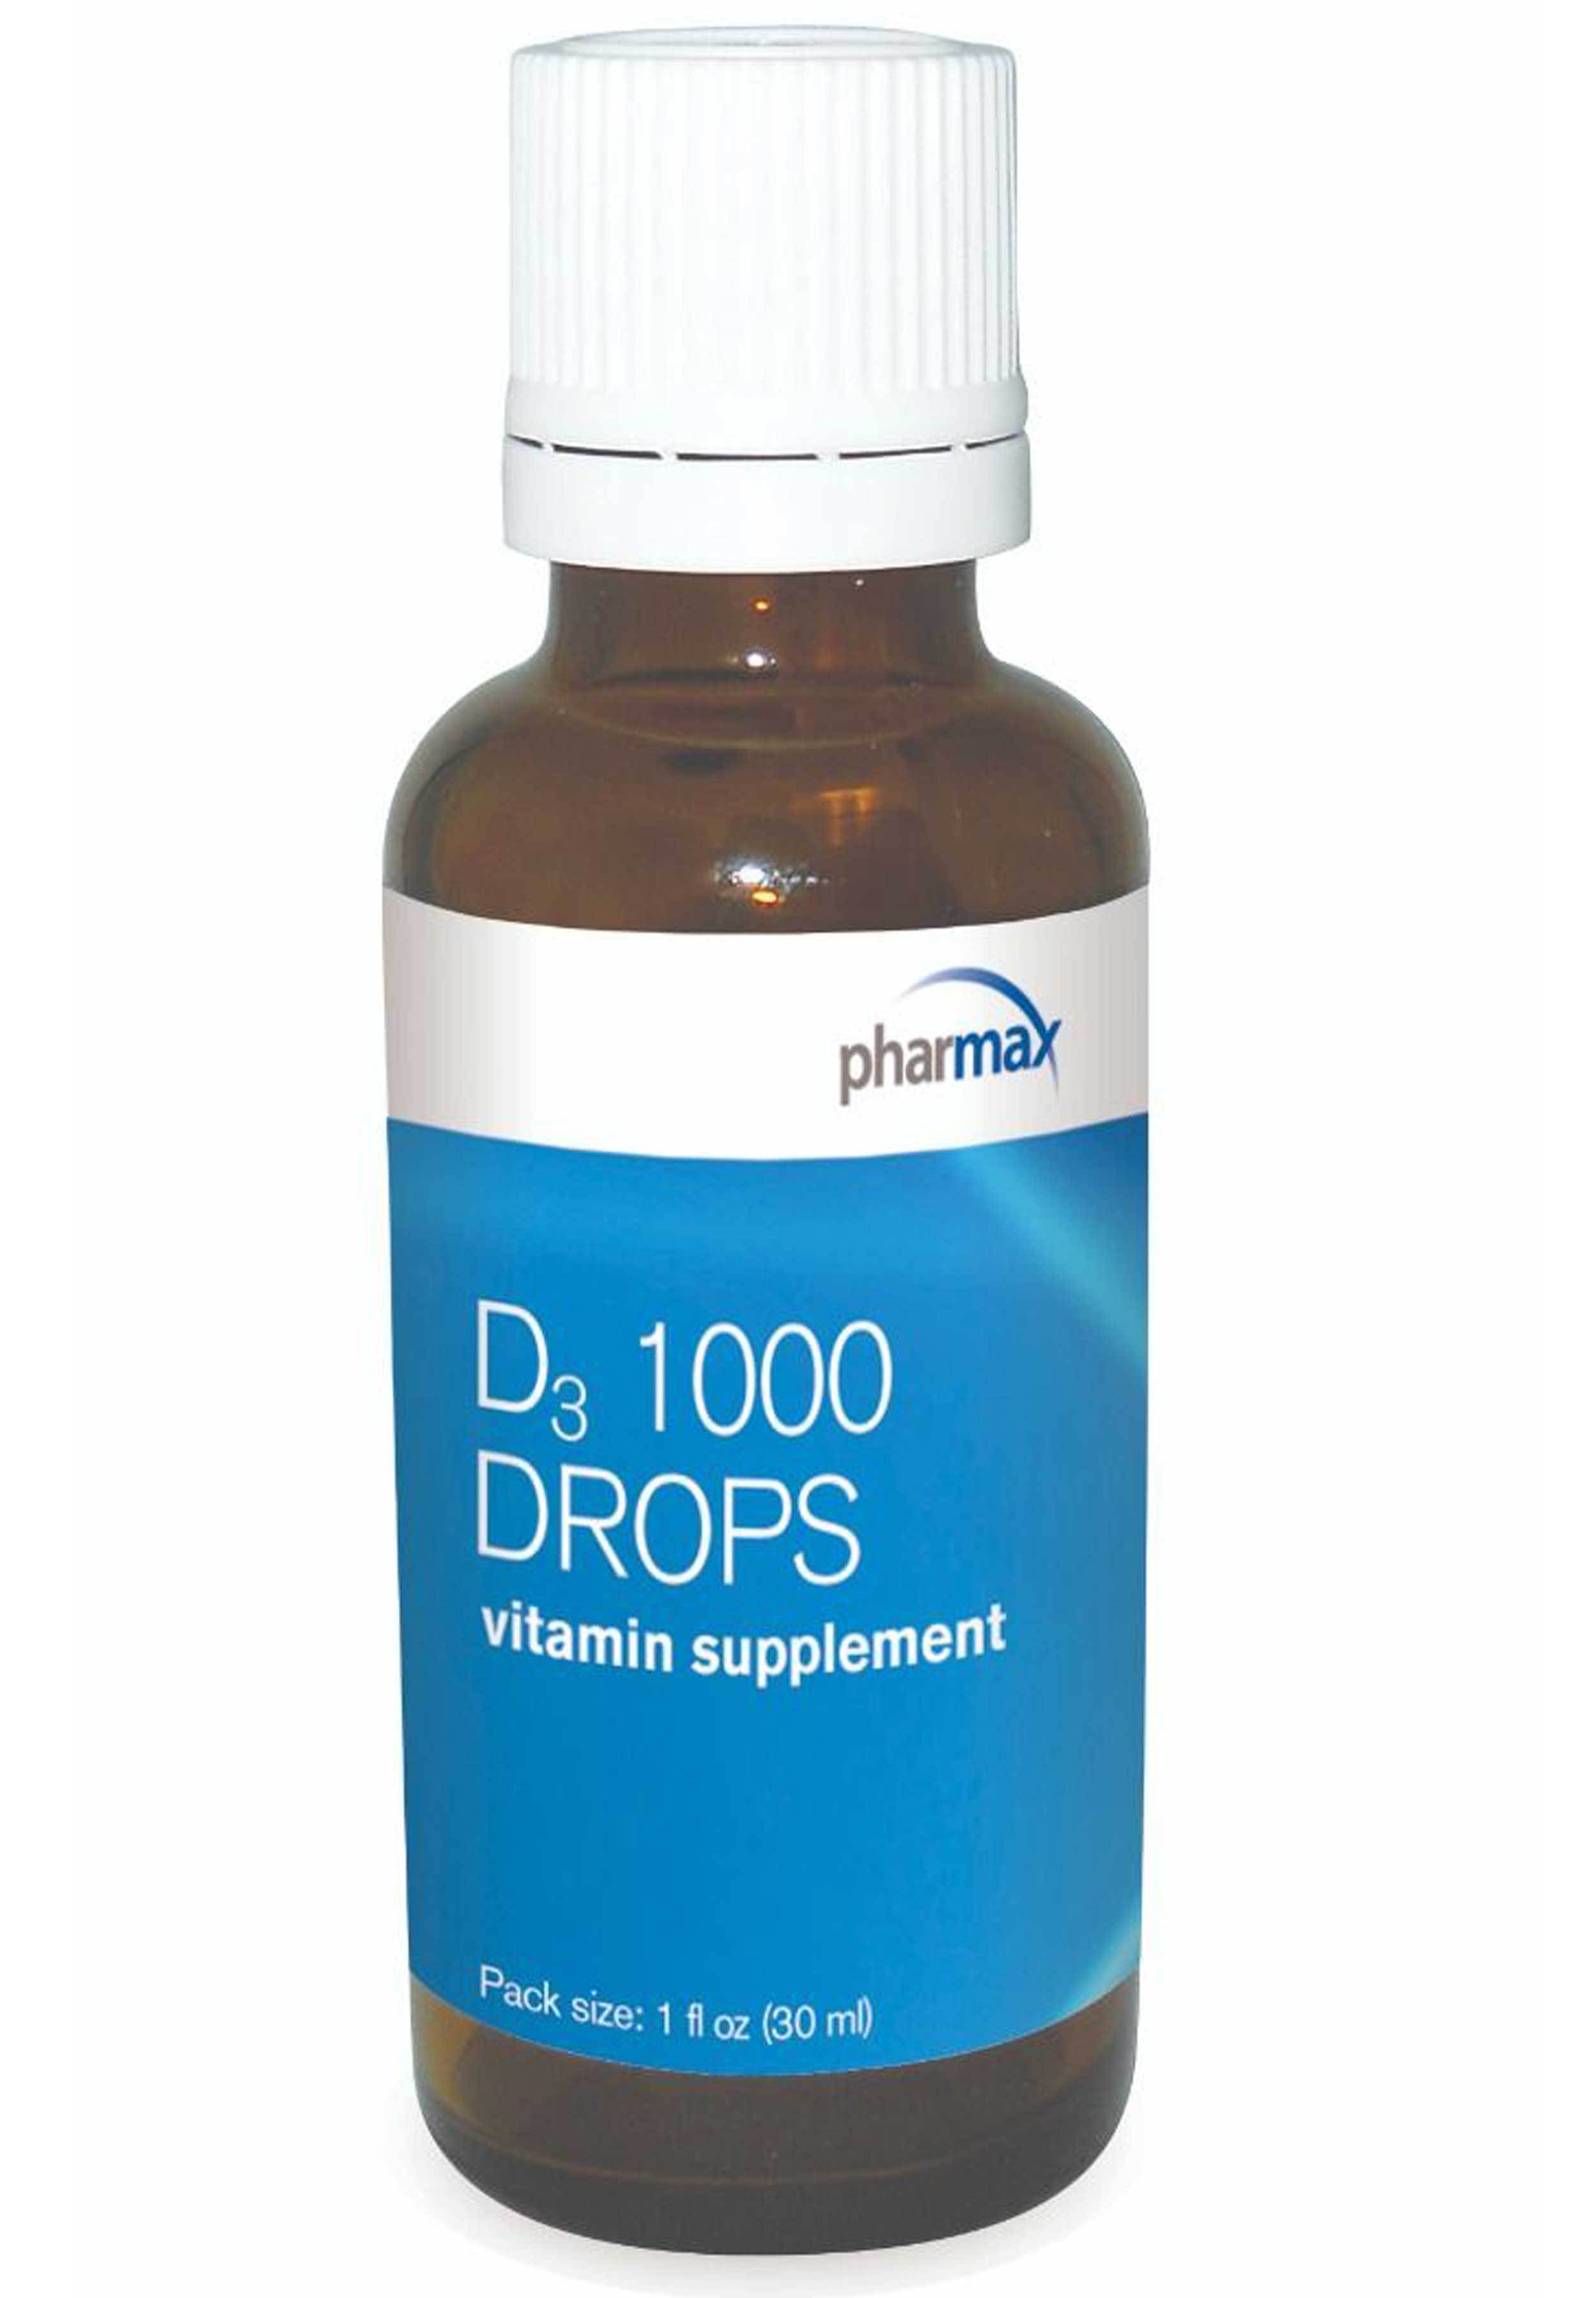 Pharmax D3 1000 Drops